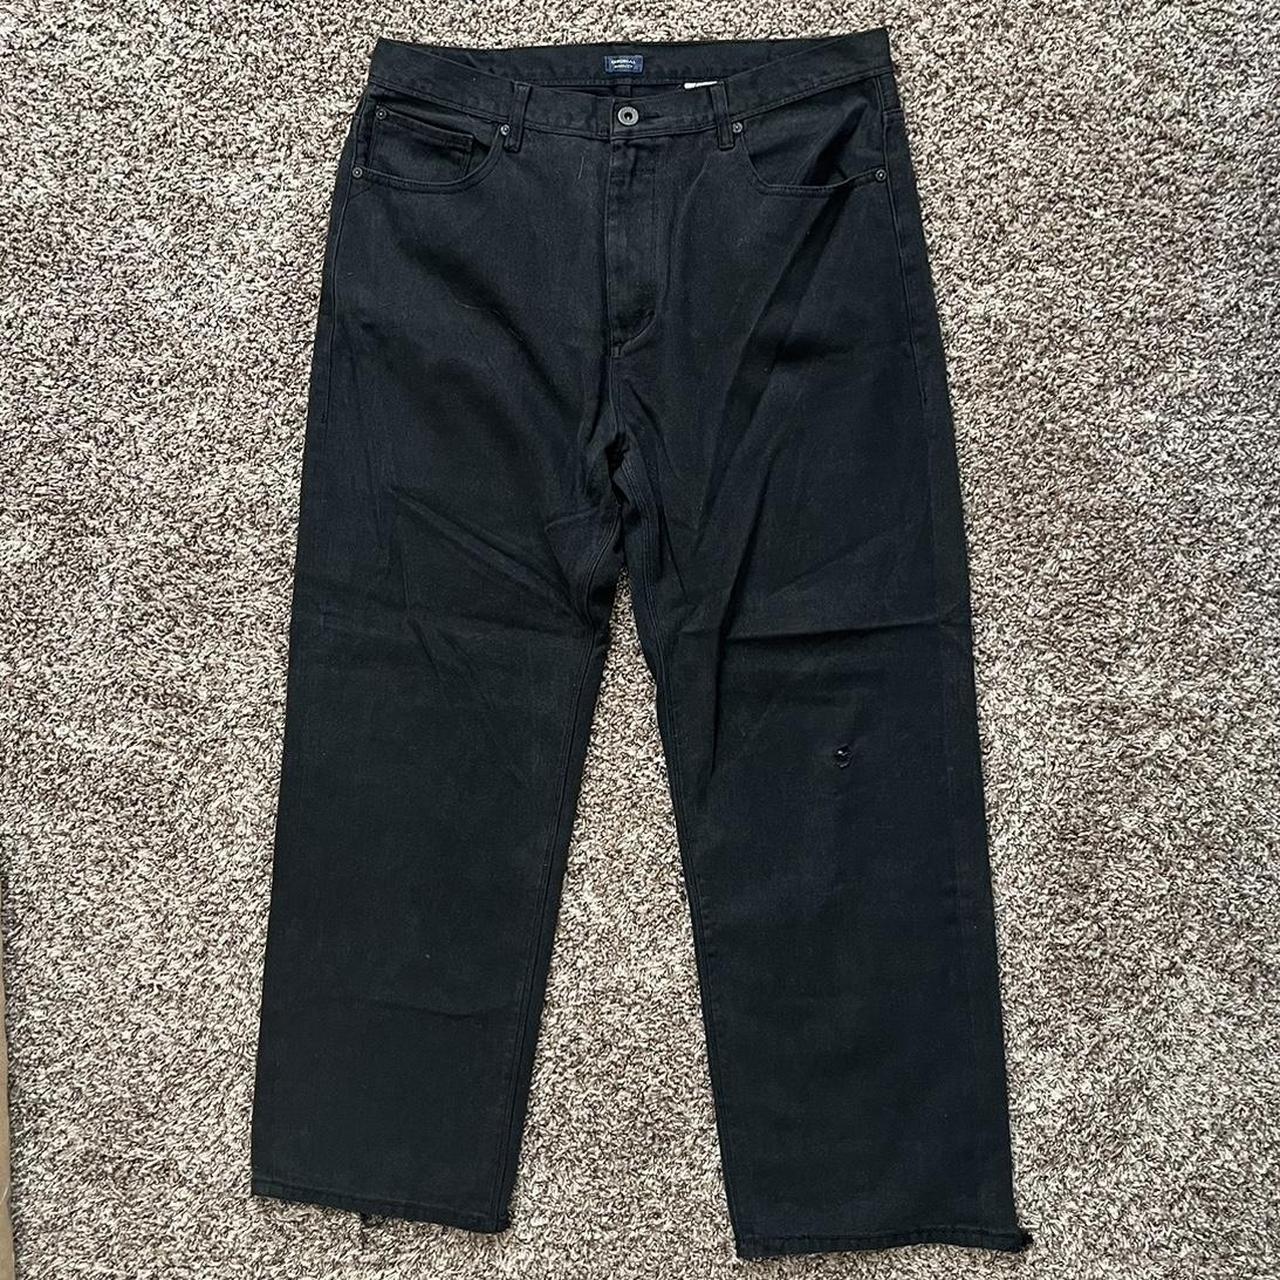 Sean John original Garvey baggy jeans. W 38 - L 32 (... - Depop